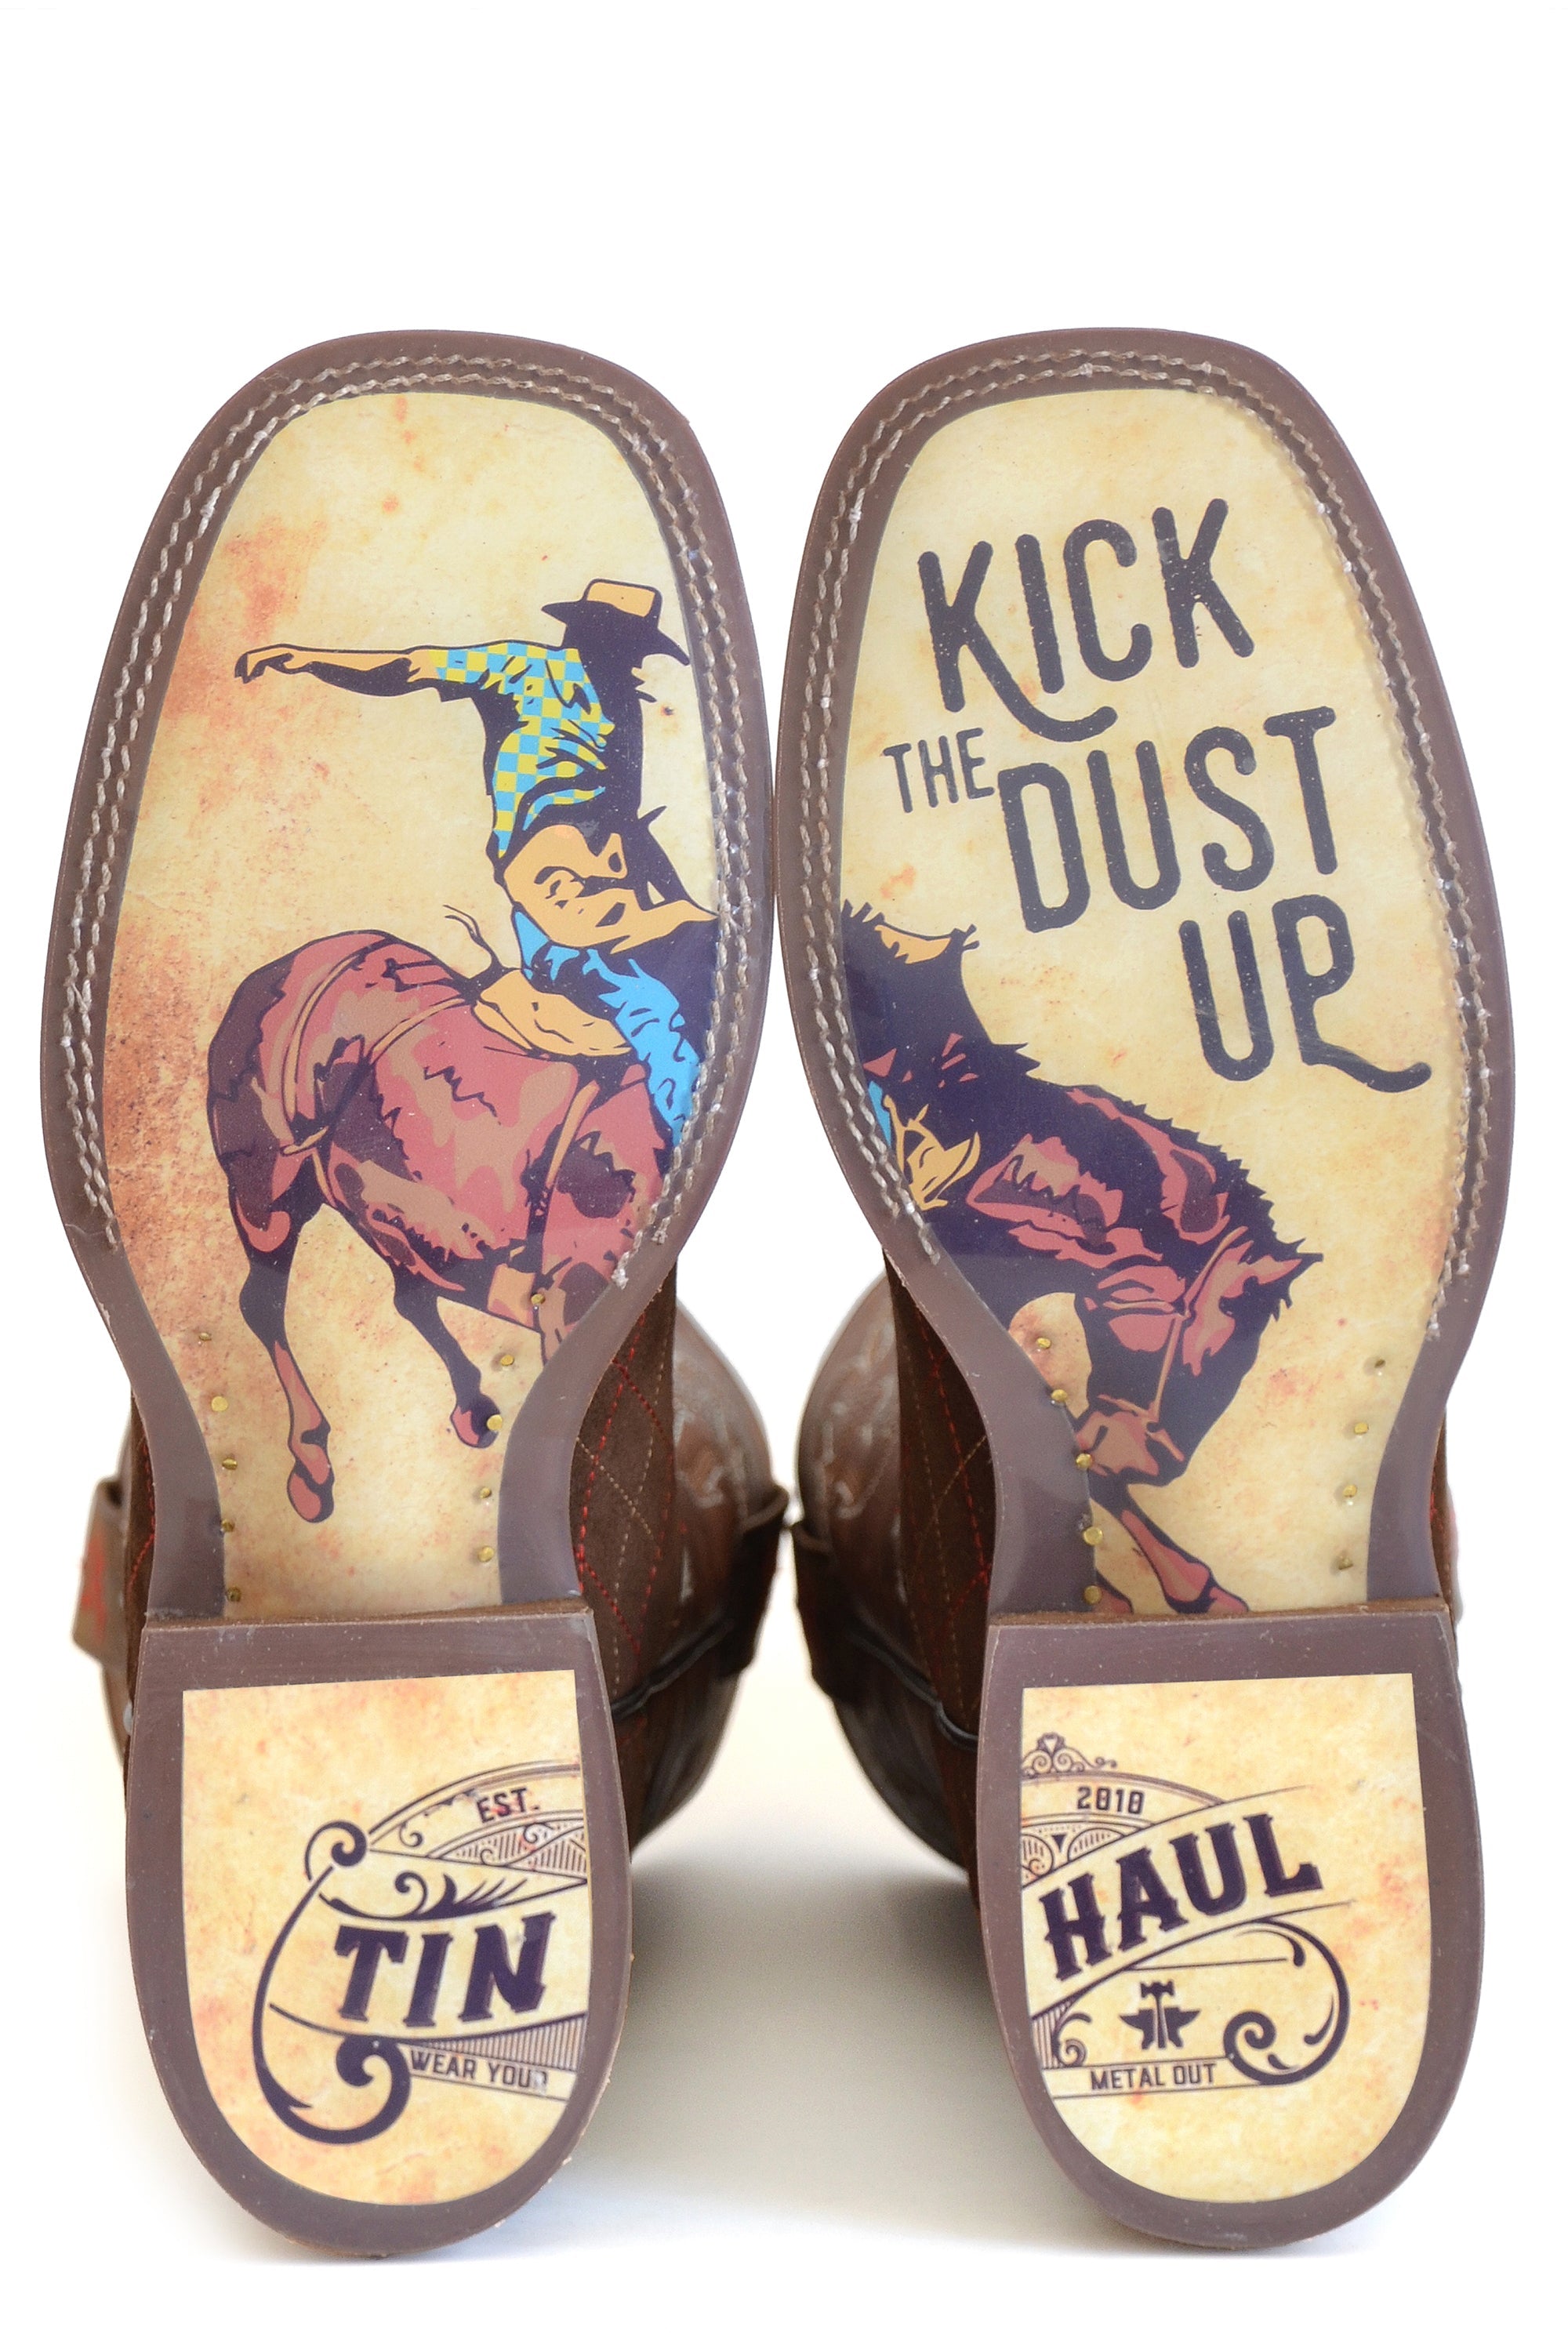 Tin Haul MENS ASPHALT CRACKS WITH KICK UP THE DUST SOLE - Flyclothing LLC